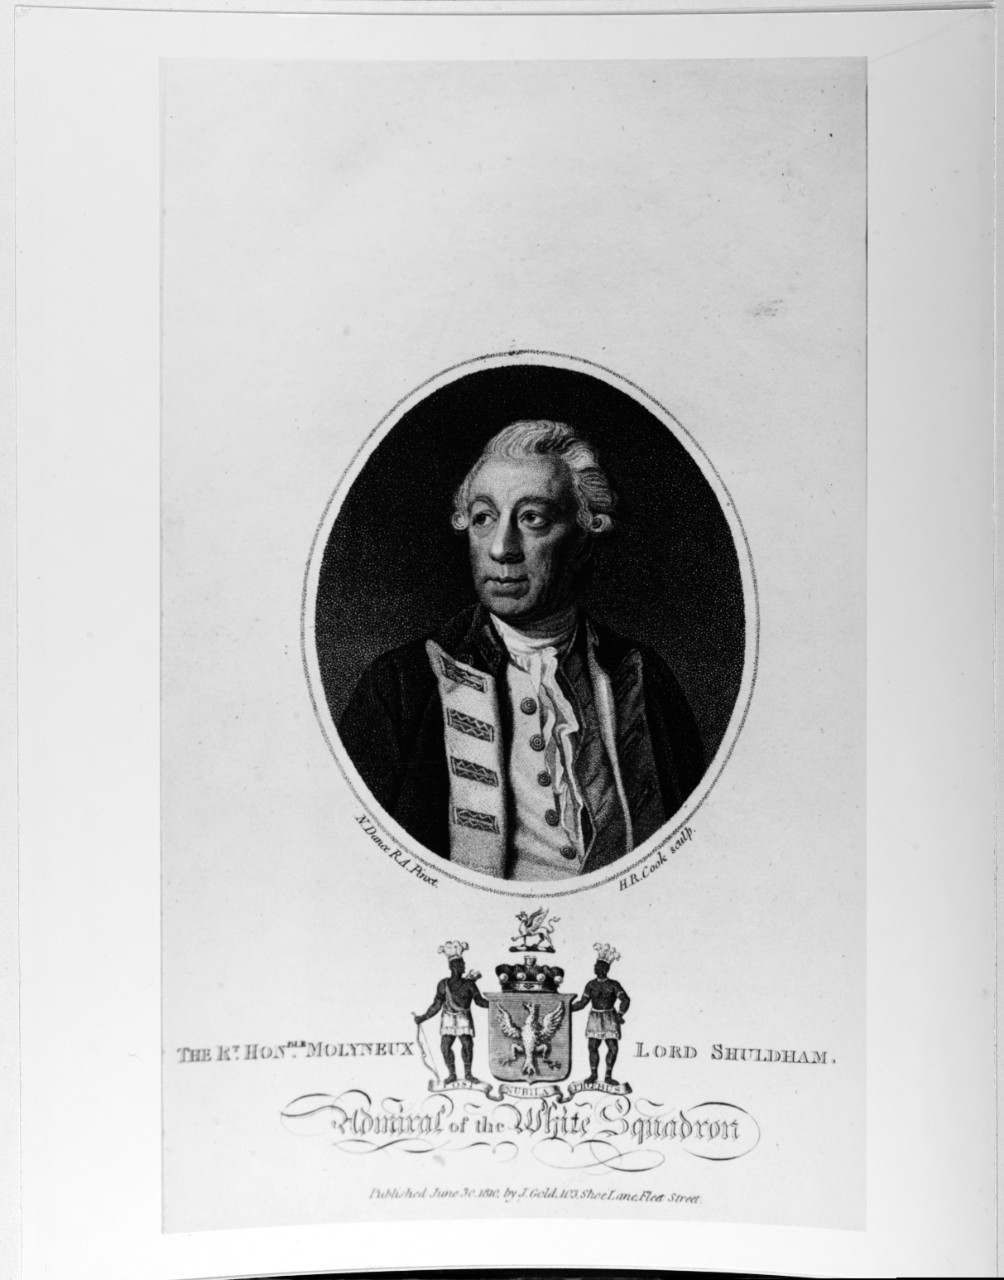 Molyneux Shuldham, Lord Shuldham (1717-1798), British Admiral